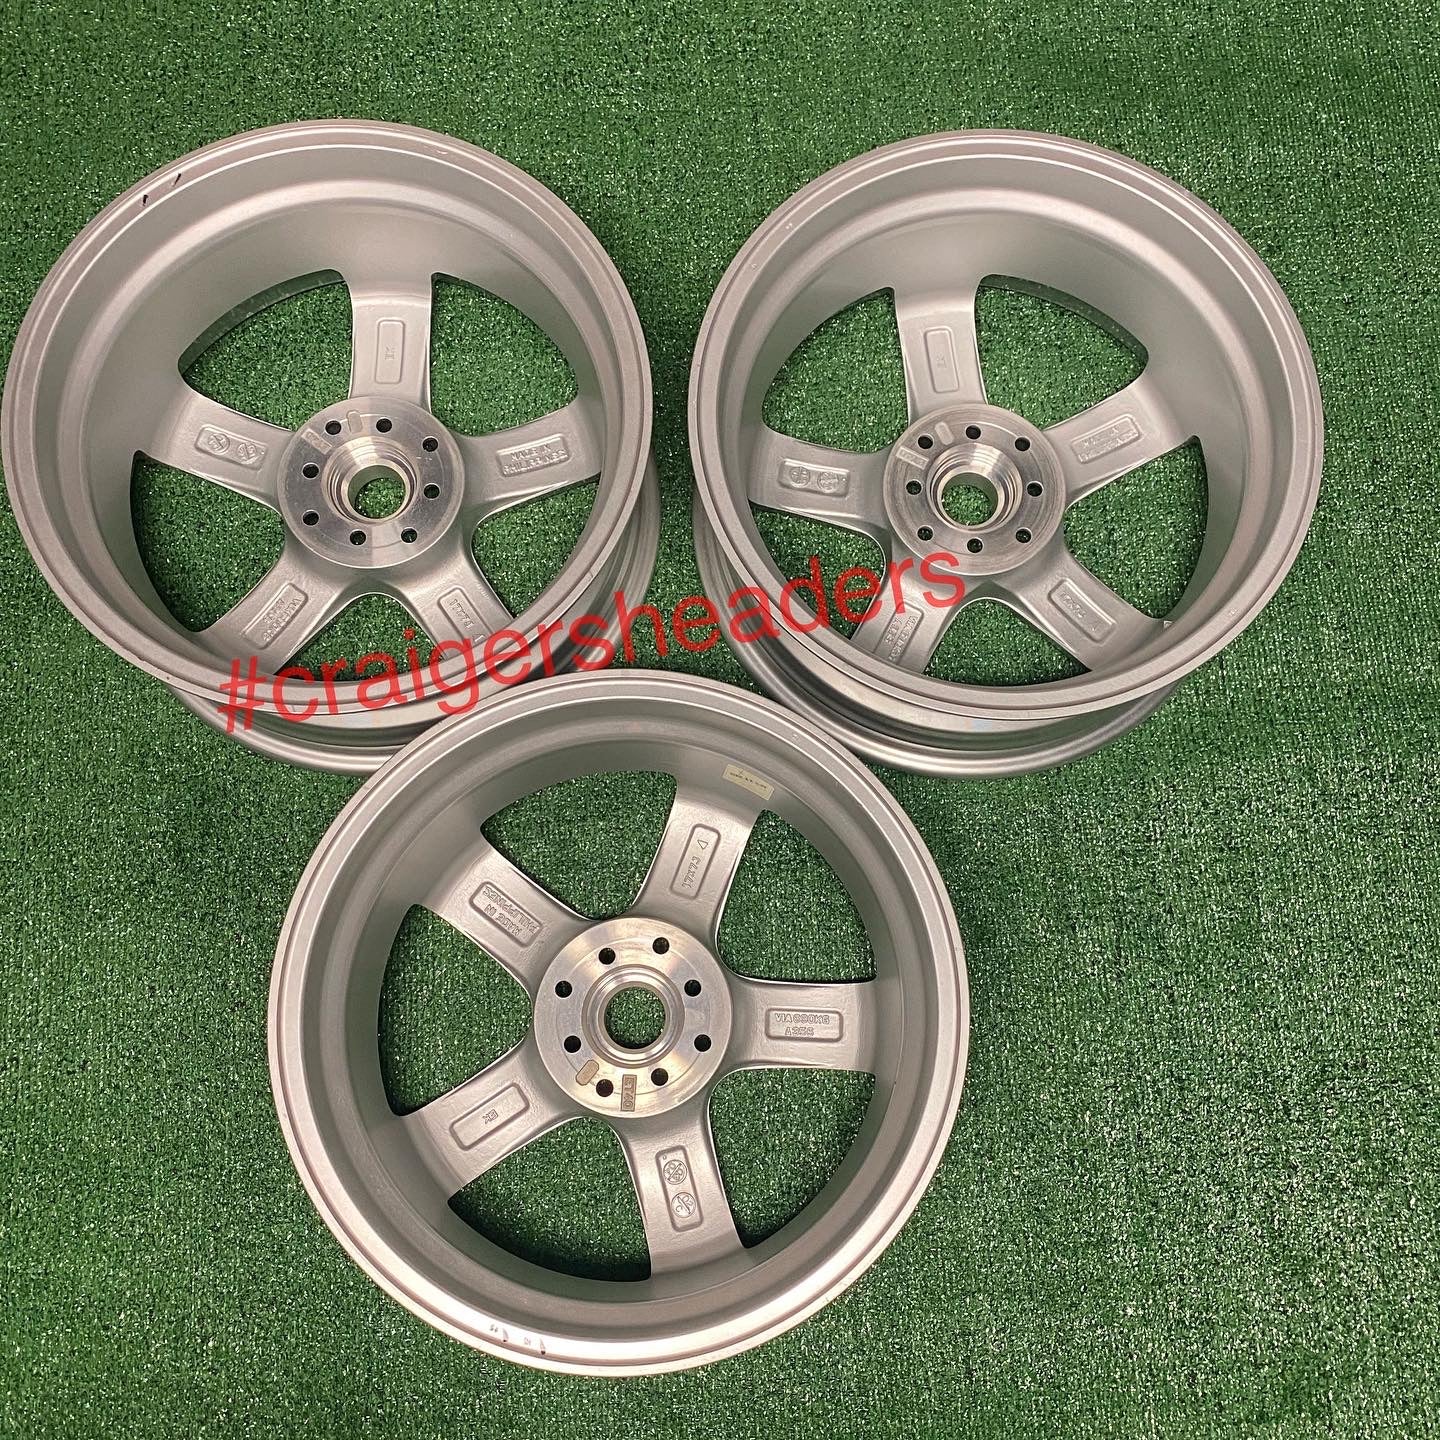 Tenzo-R GT-05 wheelset - 5x114 - 19x8.5 – Craigersheaders